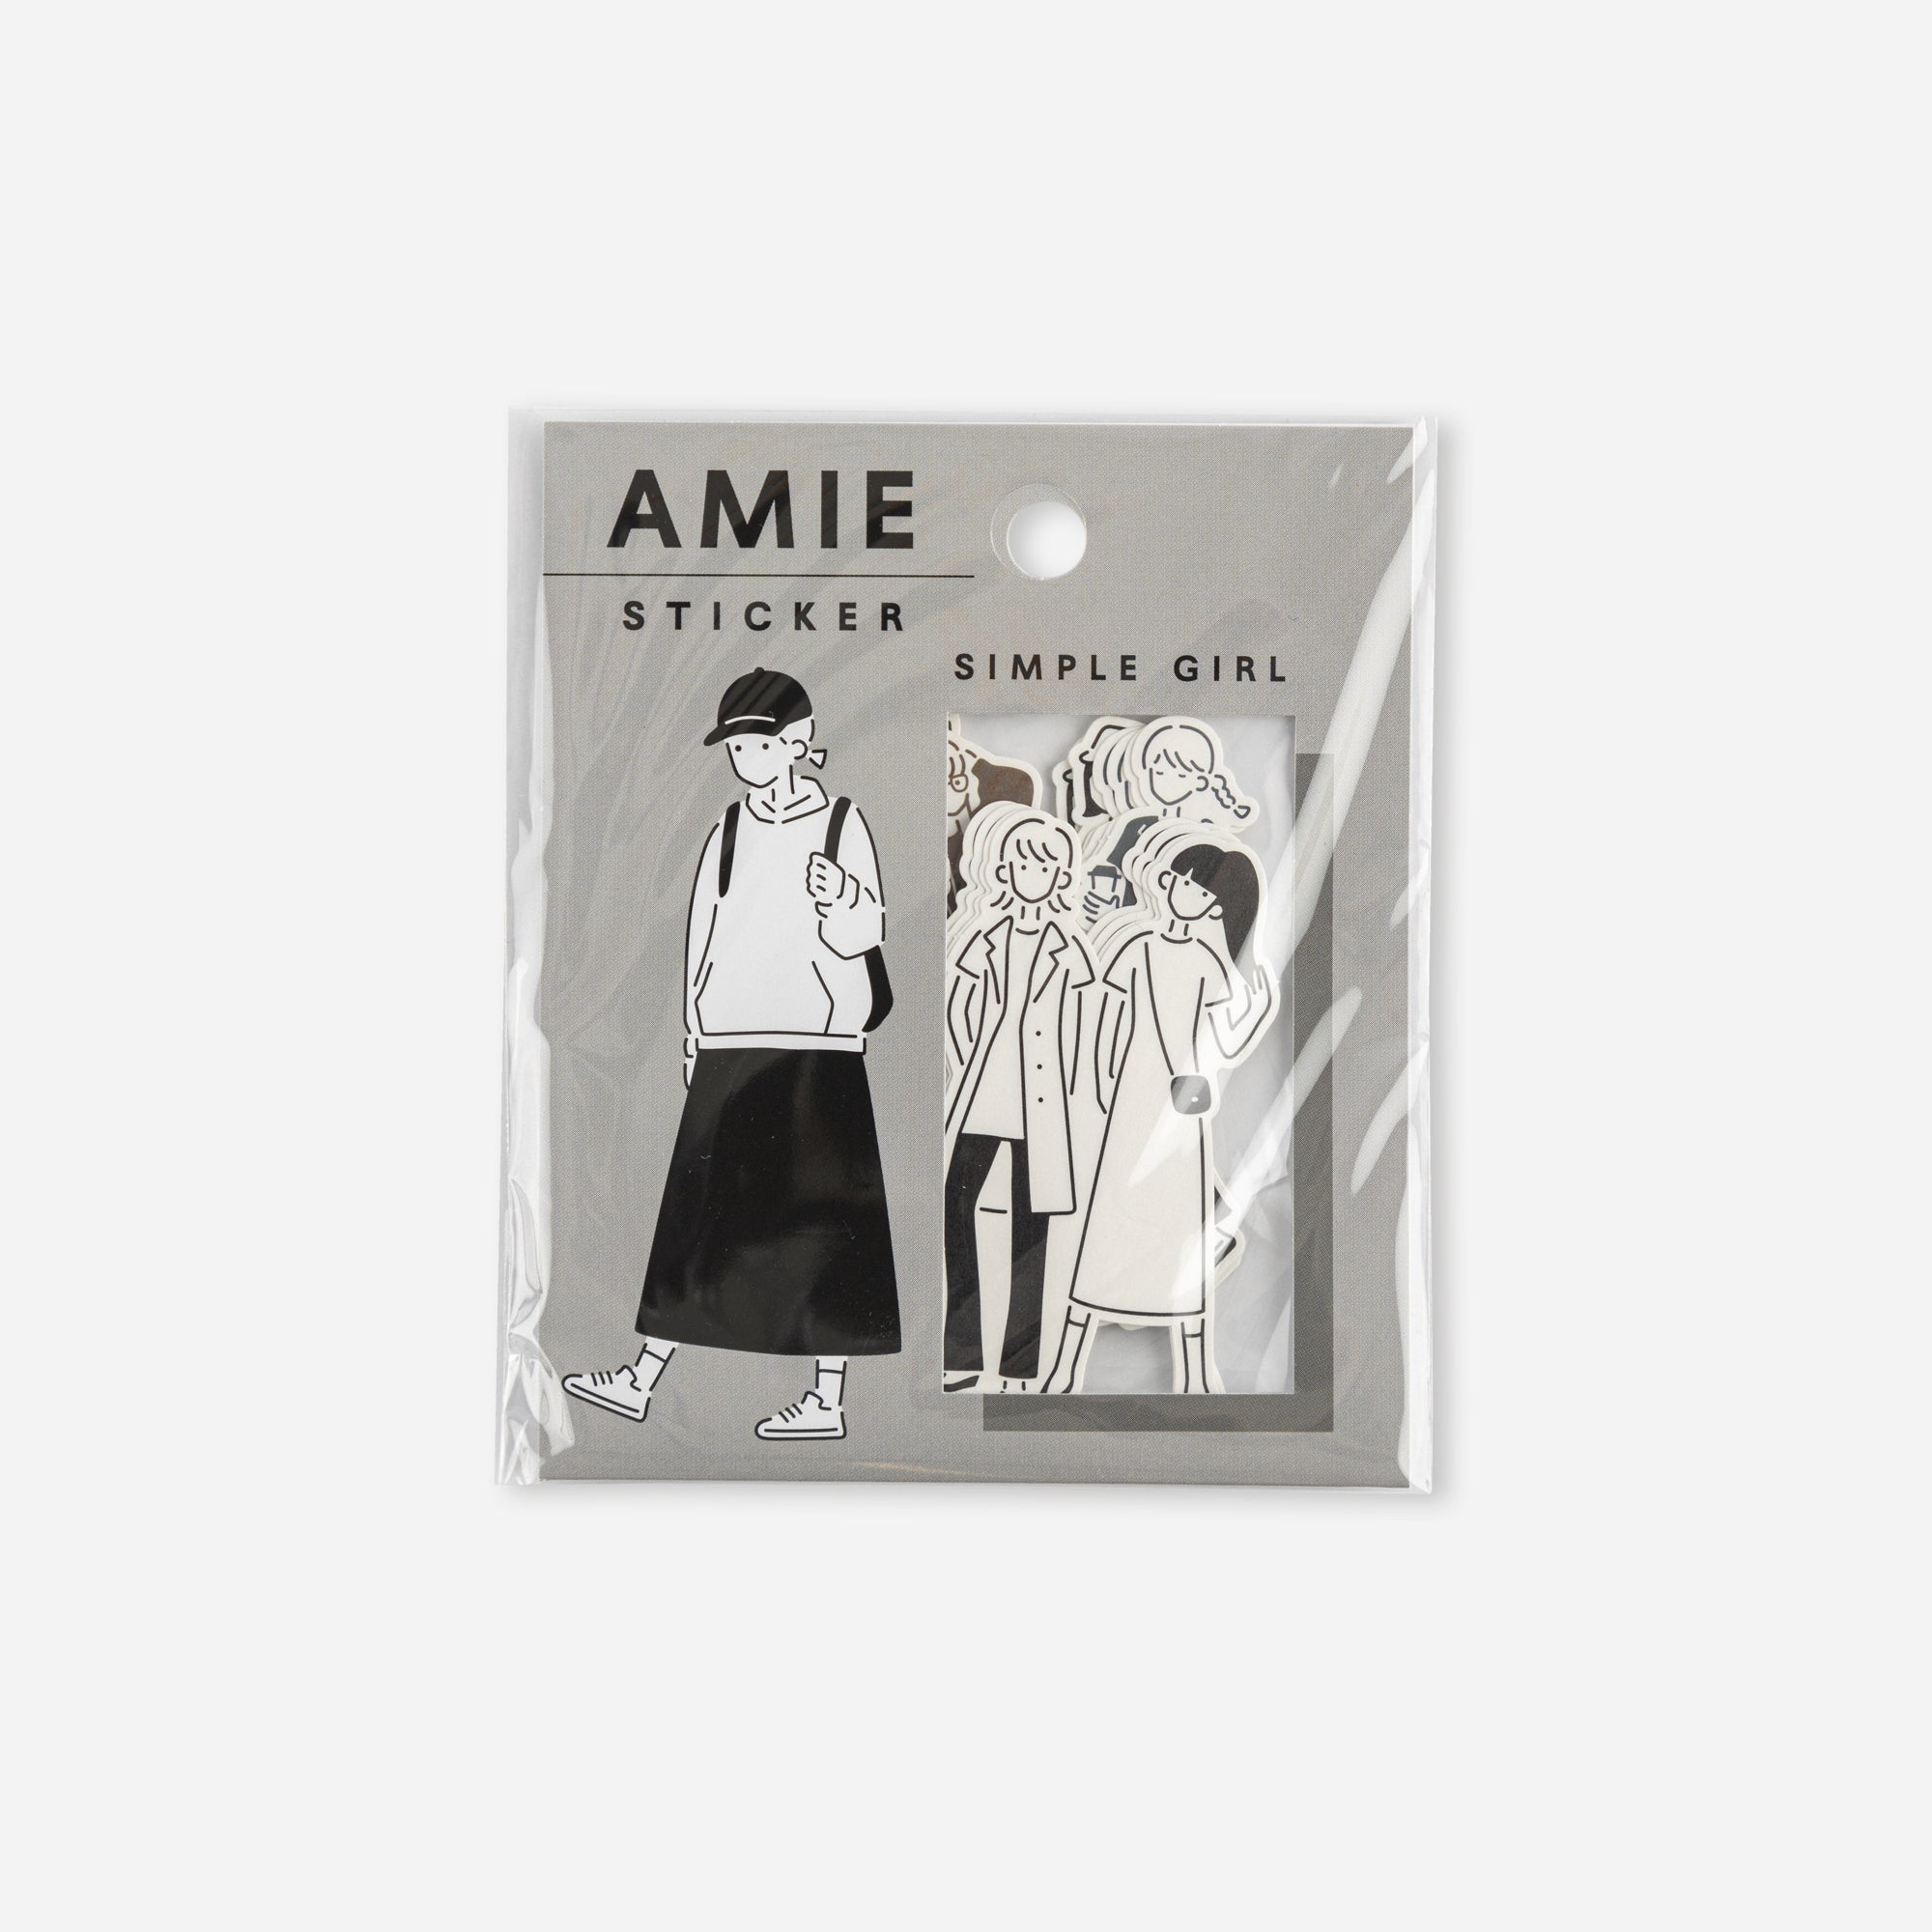 Amie Sticker Simple Girl